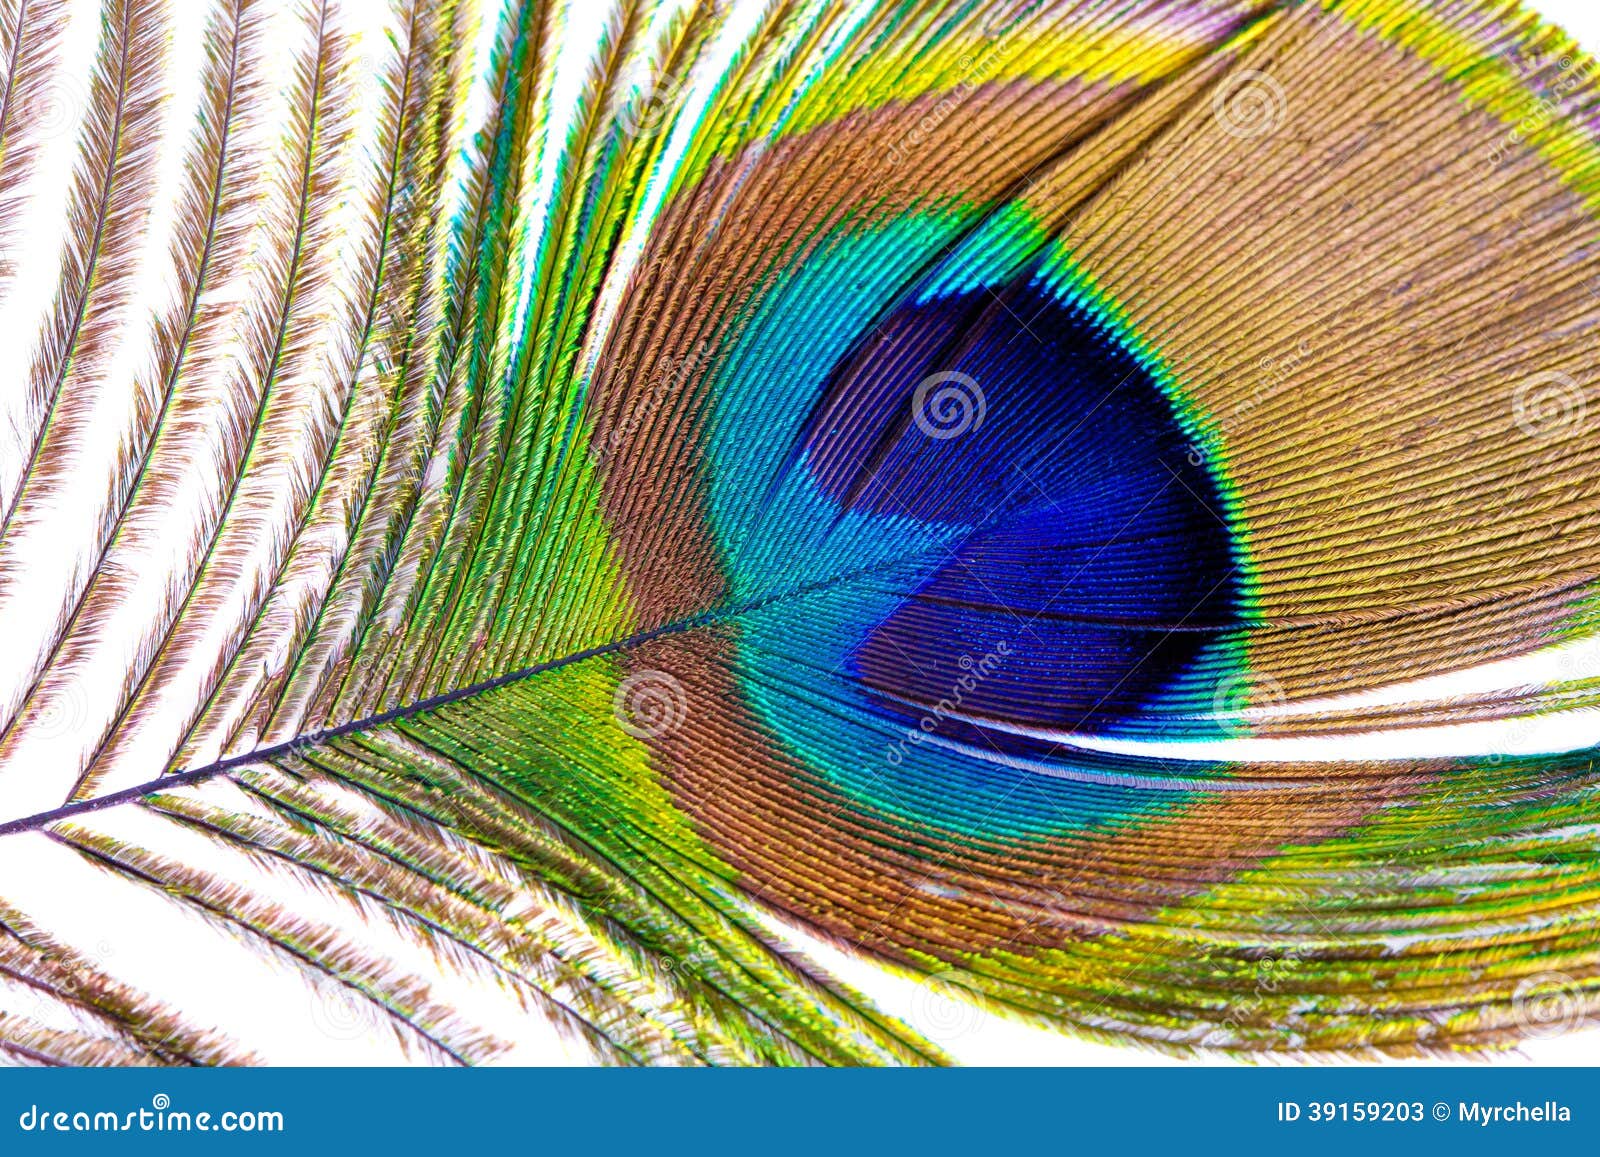 Peacock feather closeup stock image. Image of green, macro - 39159203